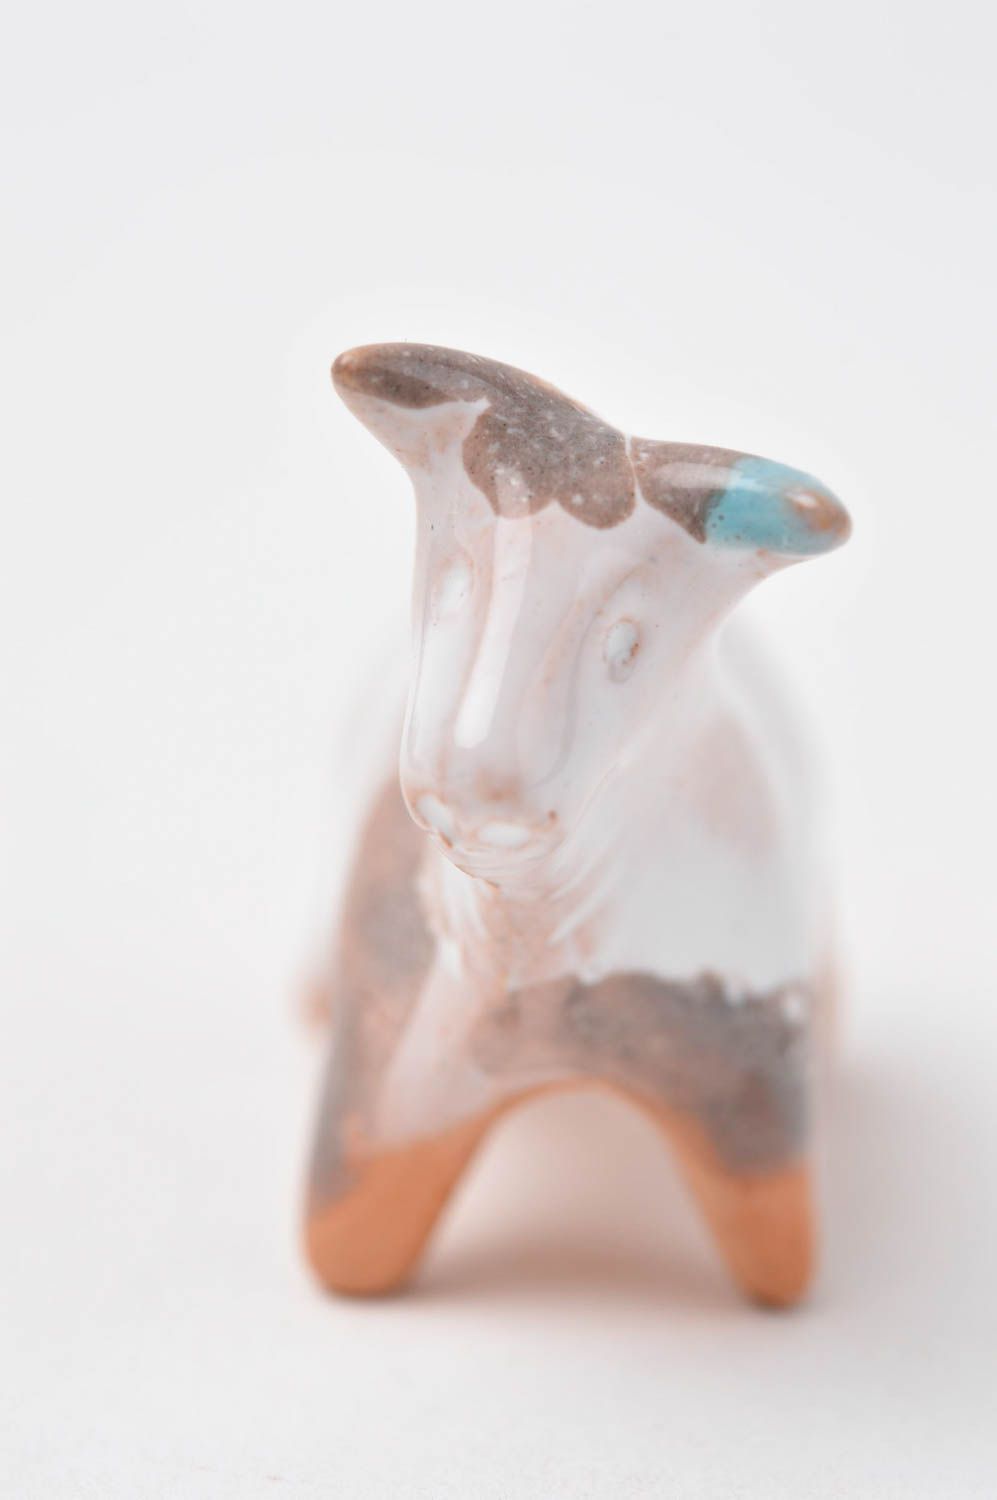 Ochse handmade Keramik Deko Figur aus Ton Tier Statue Miniatur Figur schön grell foto 8